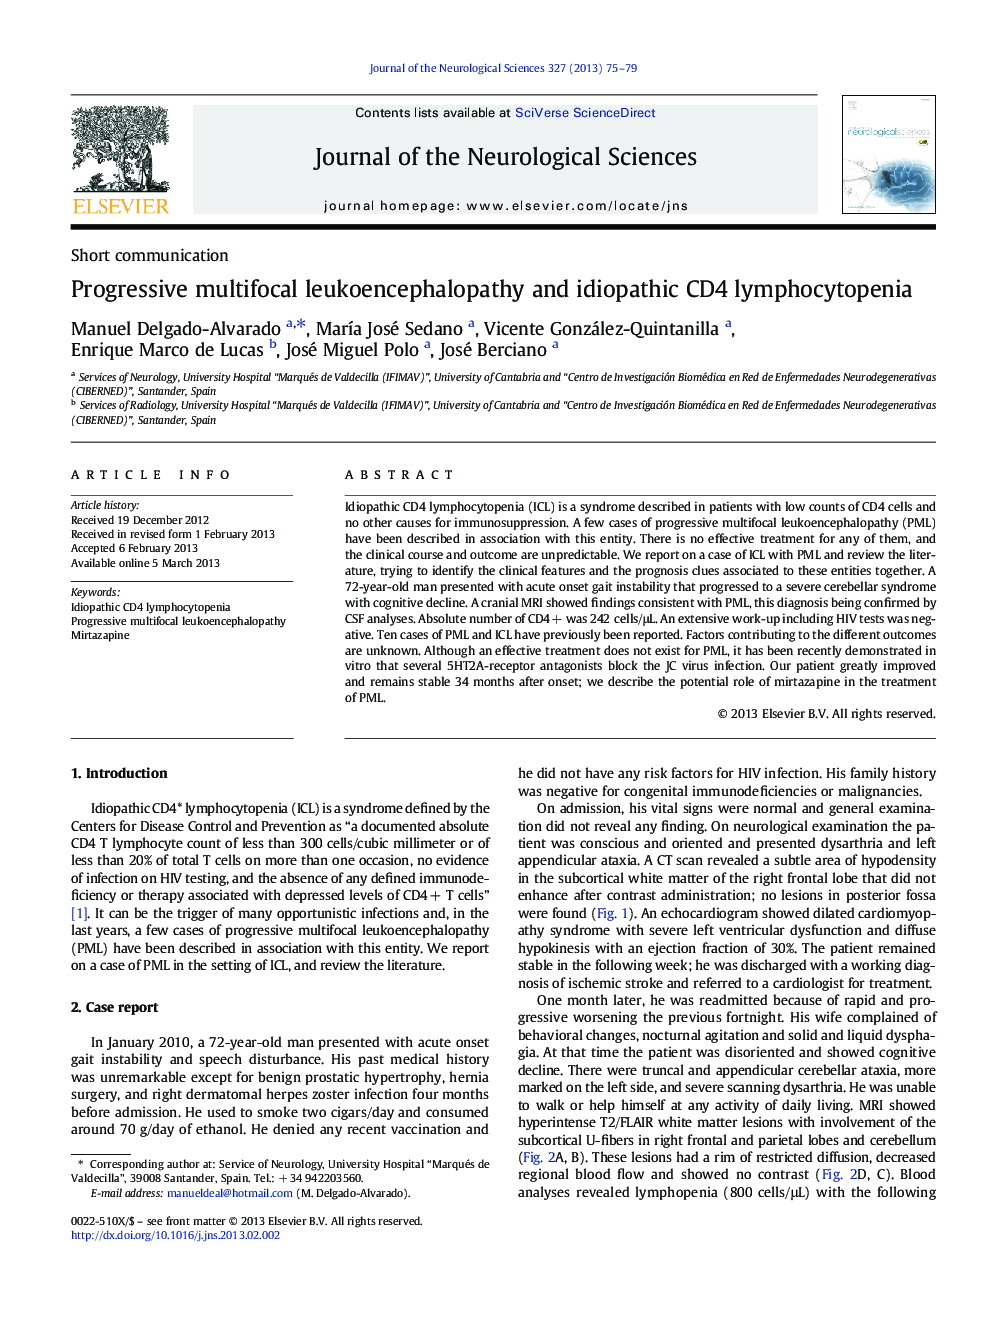 Progressive multifocal leukoencephalopathy and idiopathic CD4 lymphocytopenia